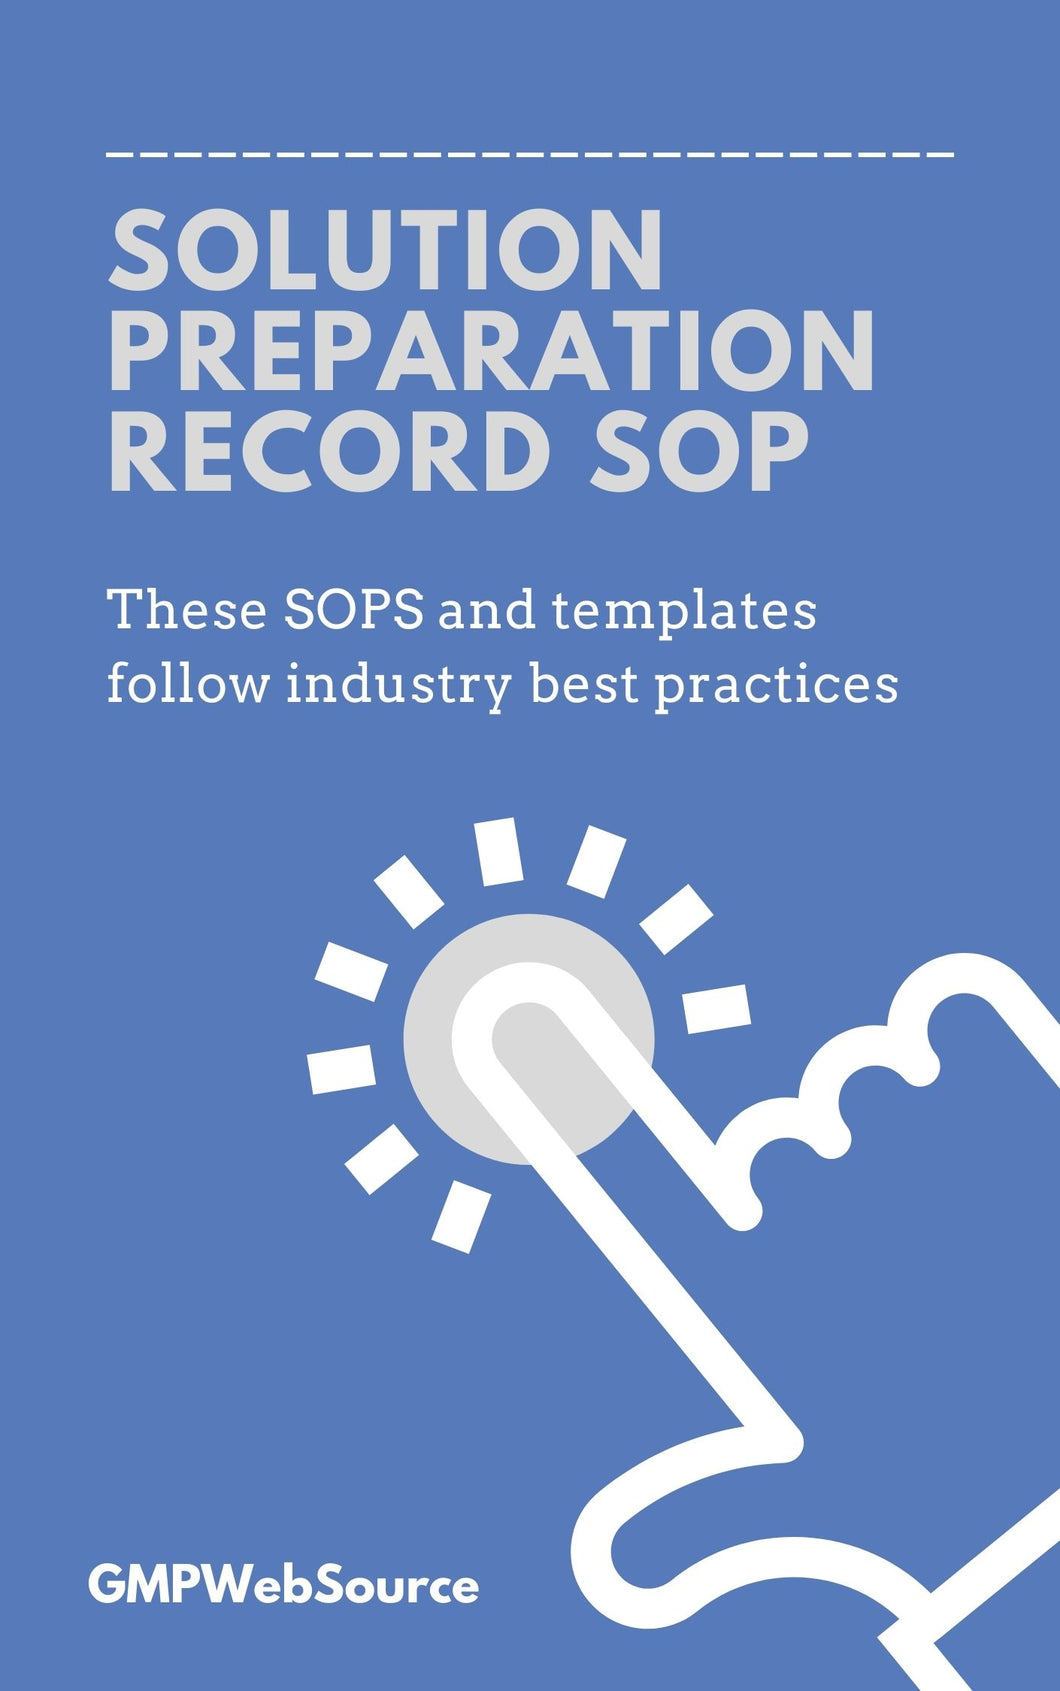 Solution Preparation Record SOP